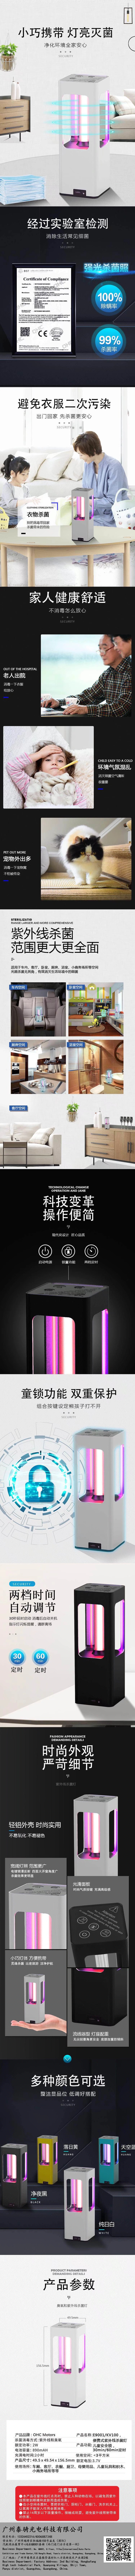 E9001 紫外线消毒灯产品详情活页.jpg